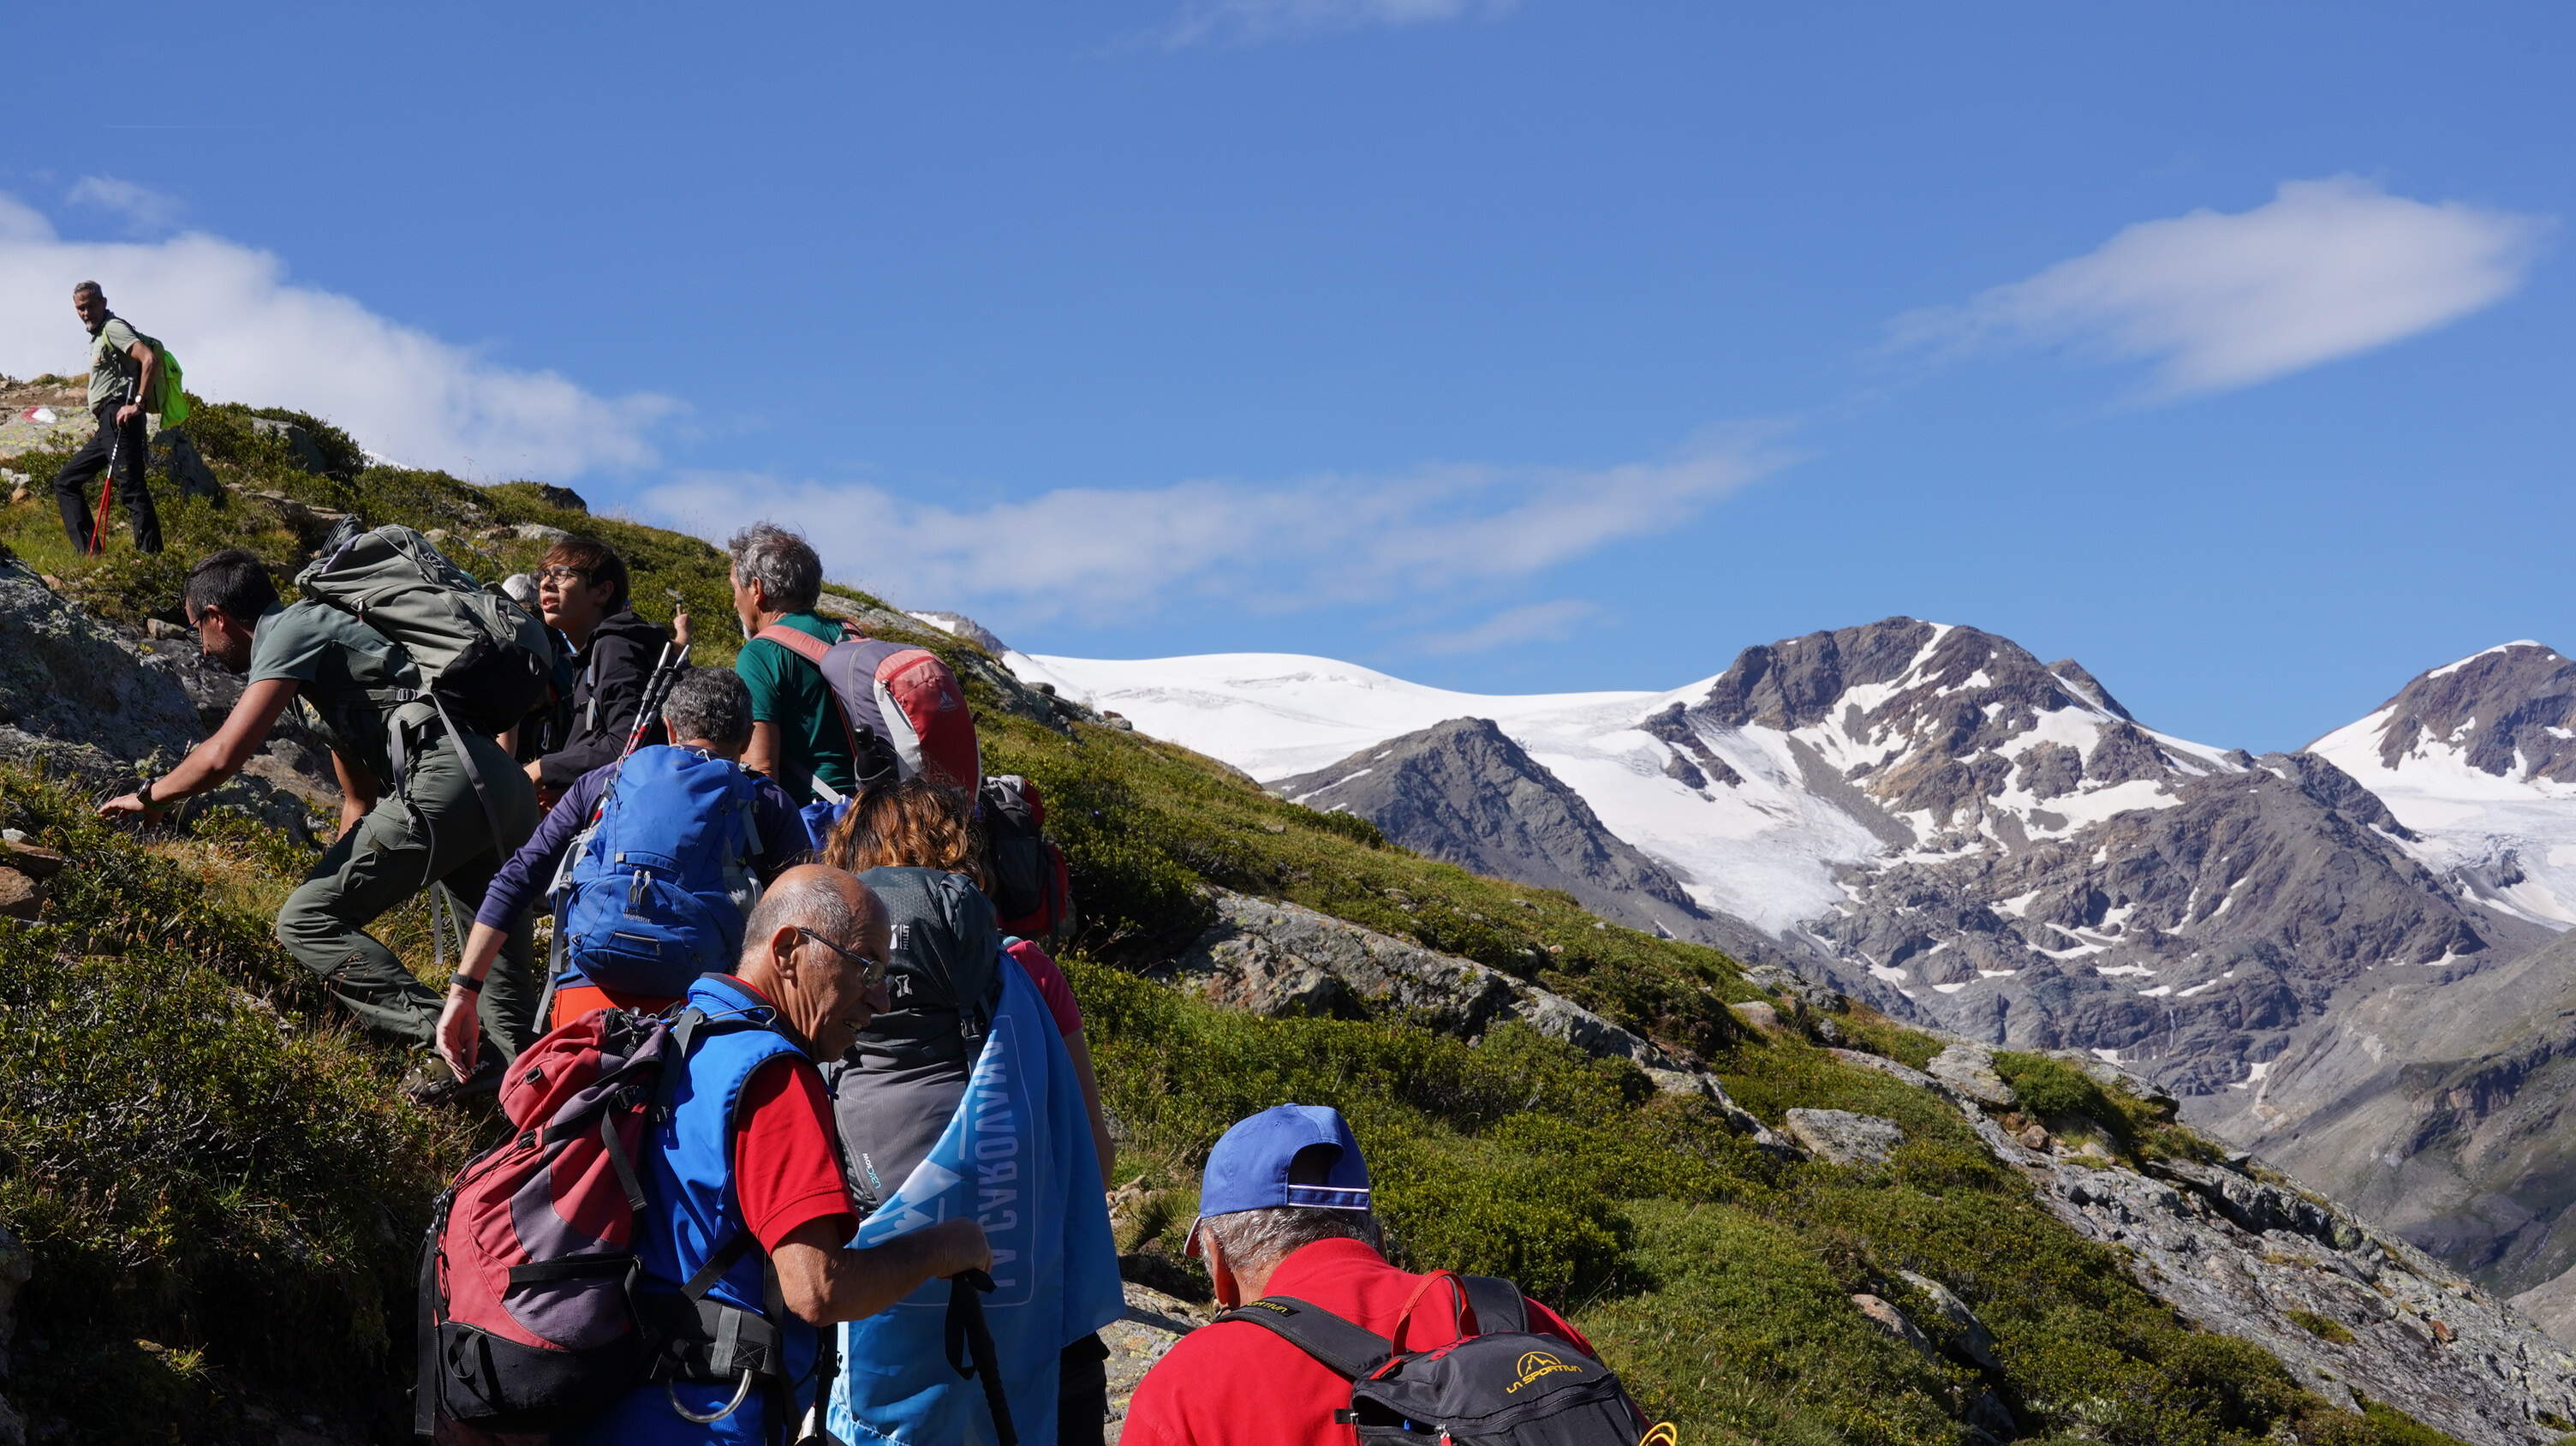 Carovana dei ghiacciai, il Vedretta lunga perde 20 metri in 17 anni